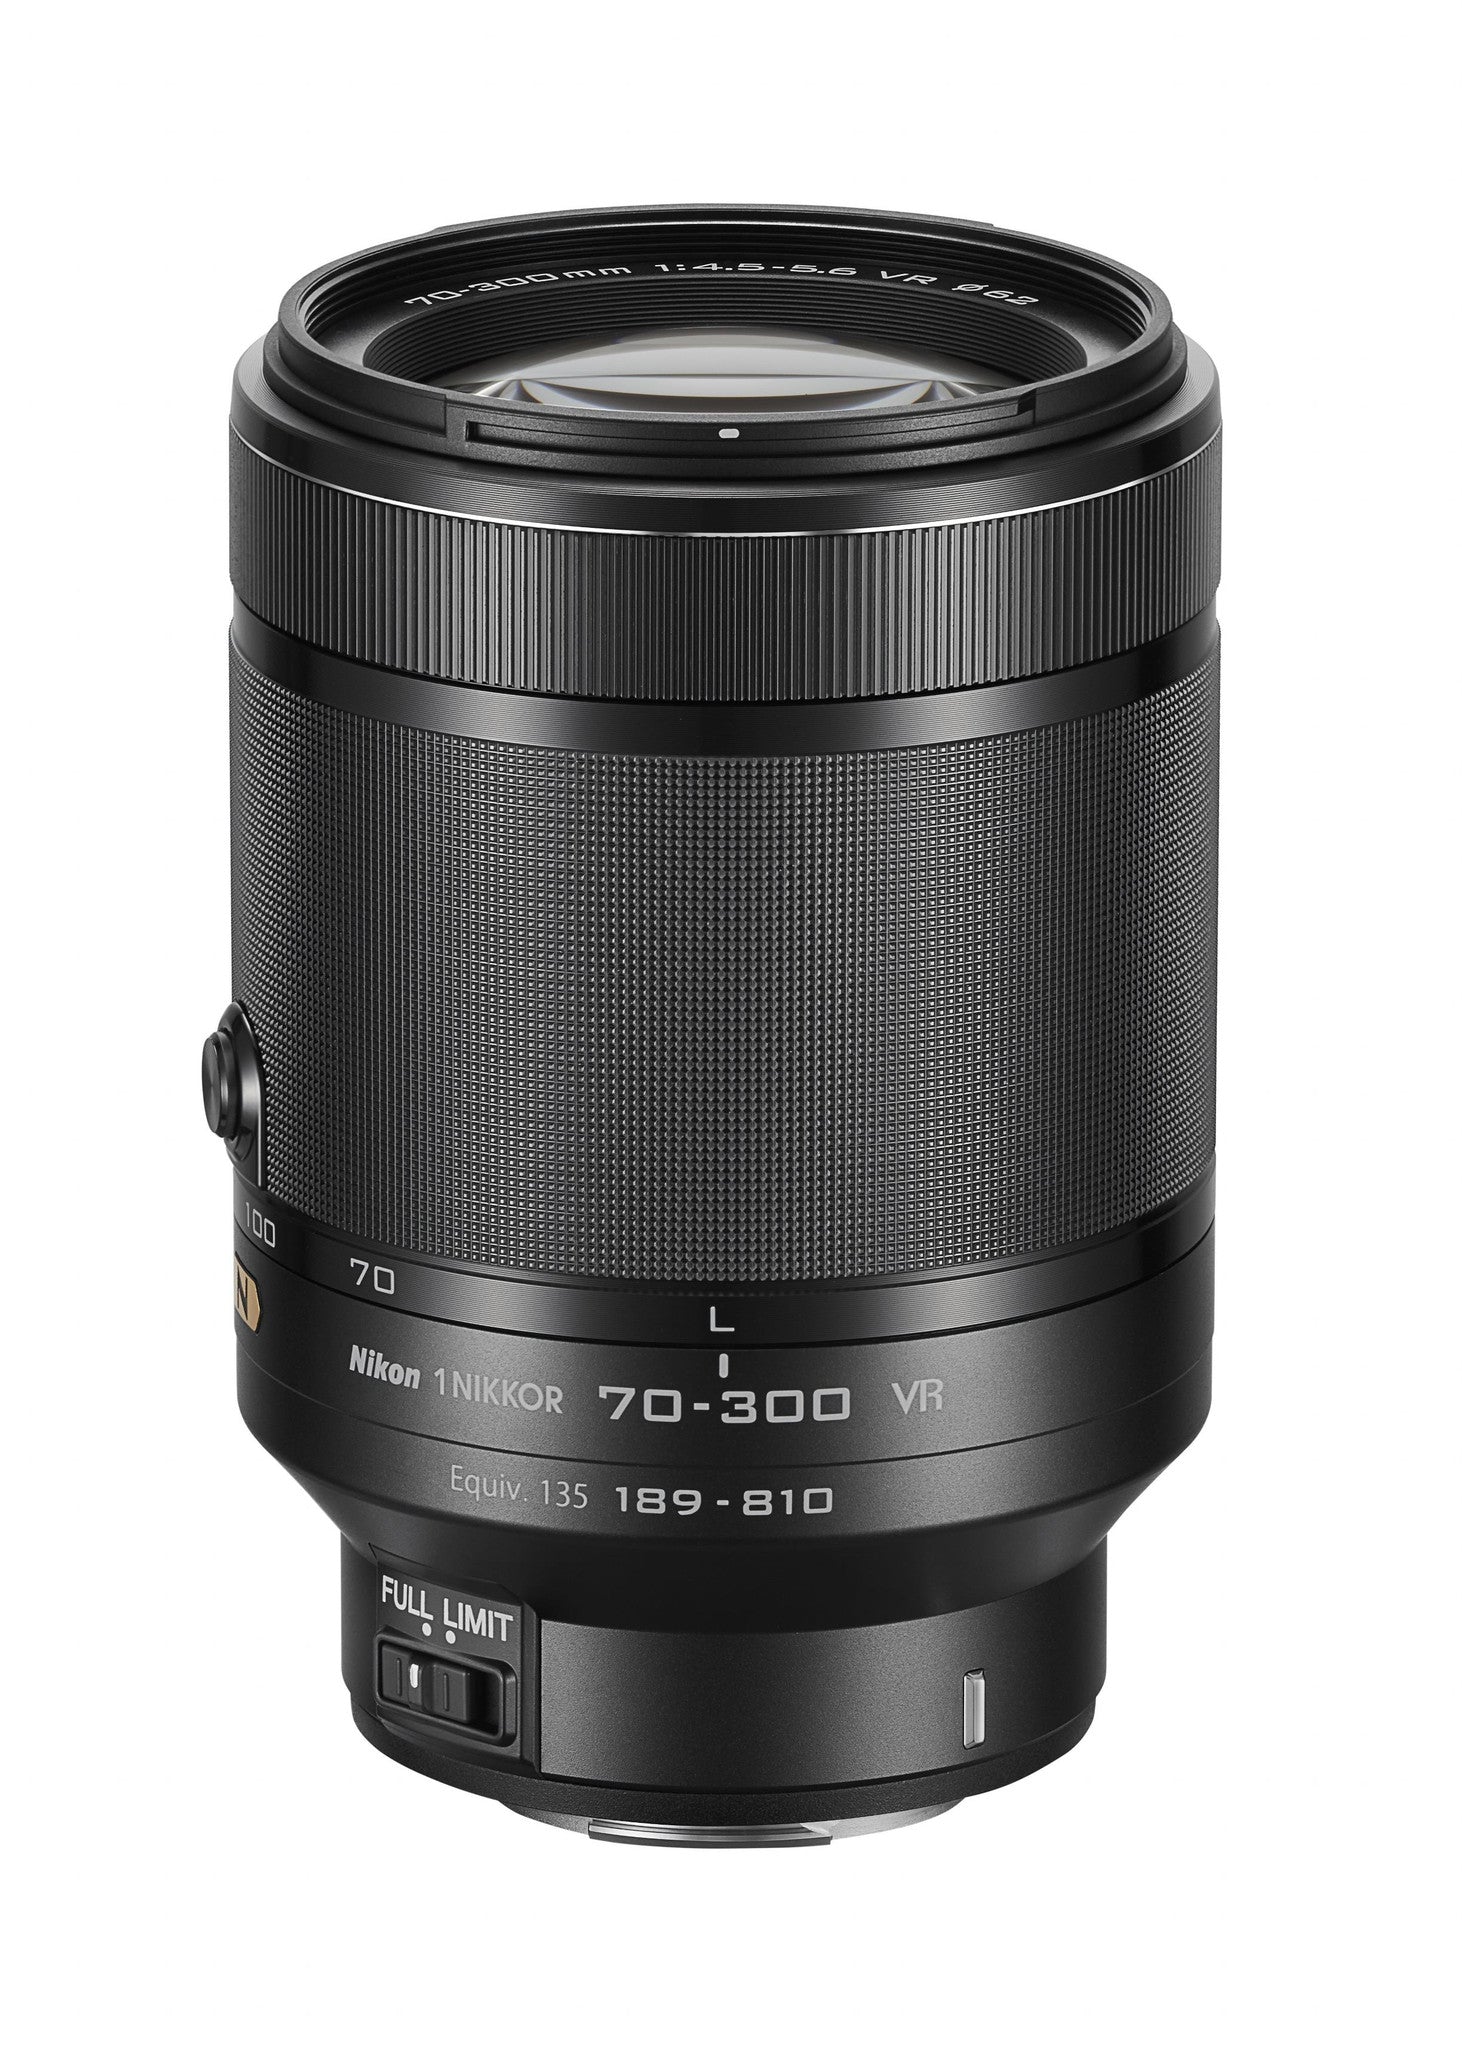 Nikon 1 Nikkor 70-300mm f/4.5-5.6 VR CX Lens, discontinued, Nikon - Pictureline  - 1